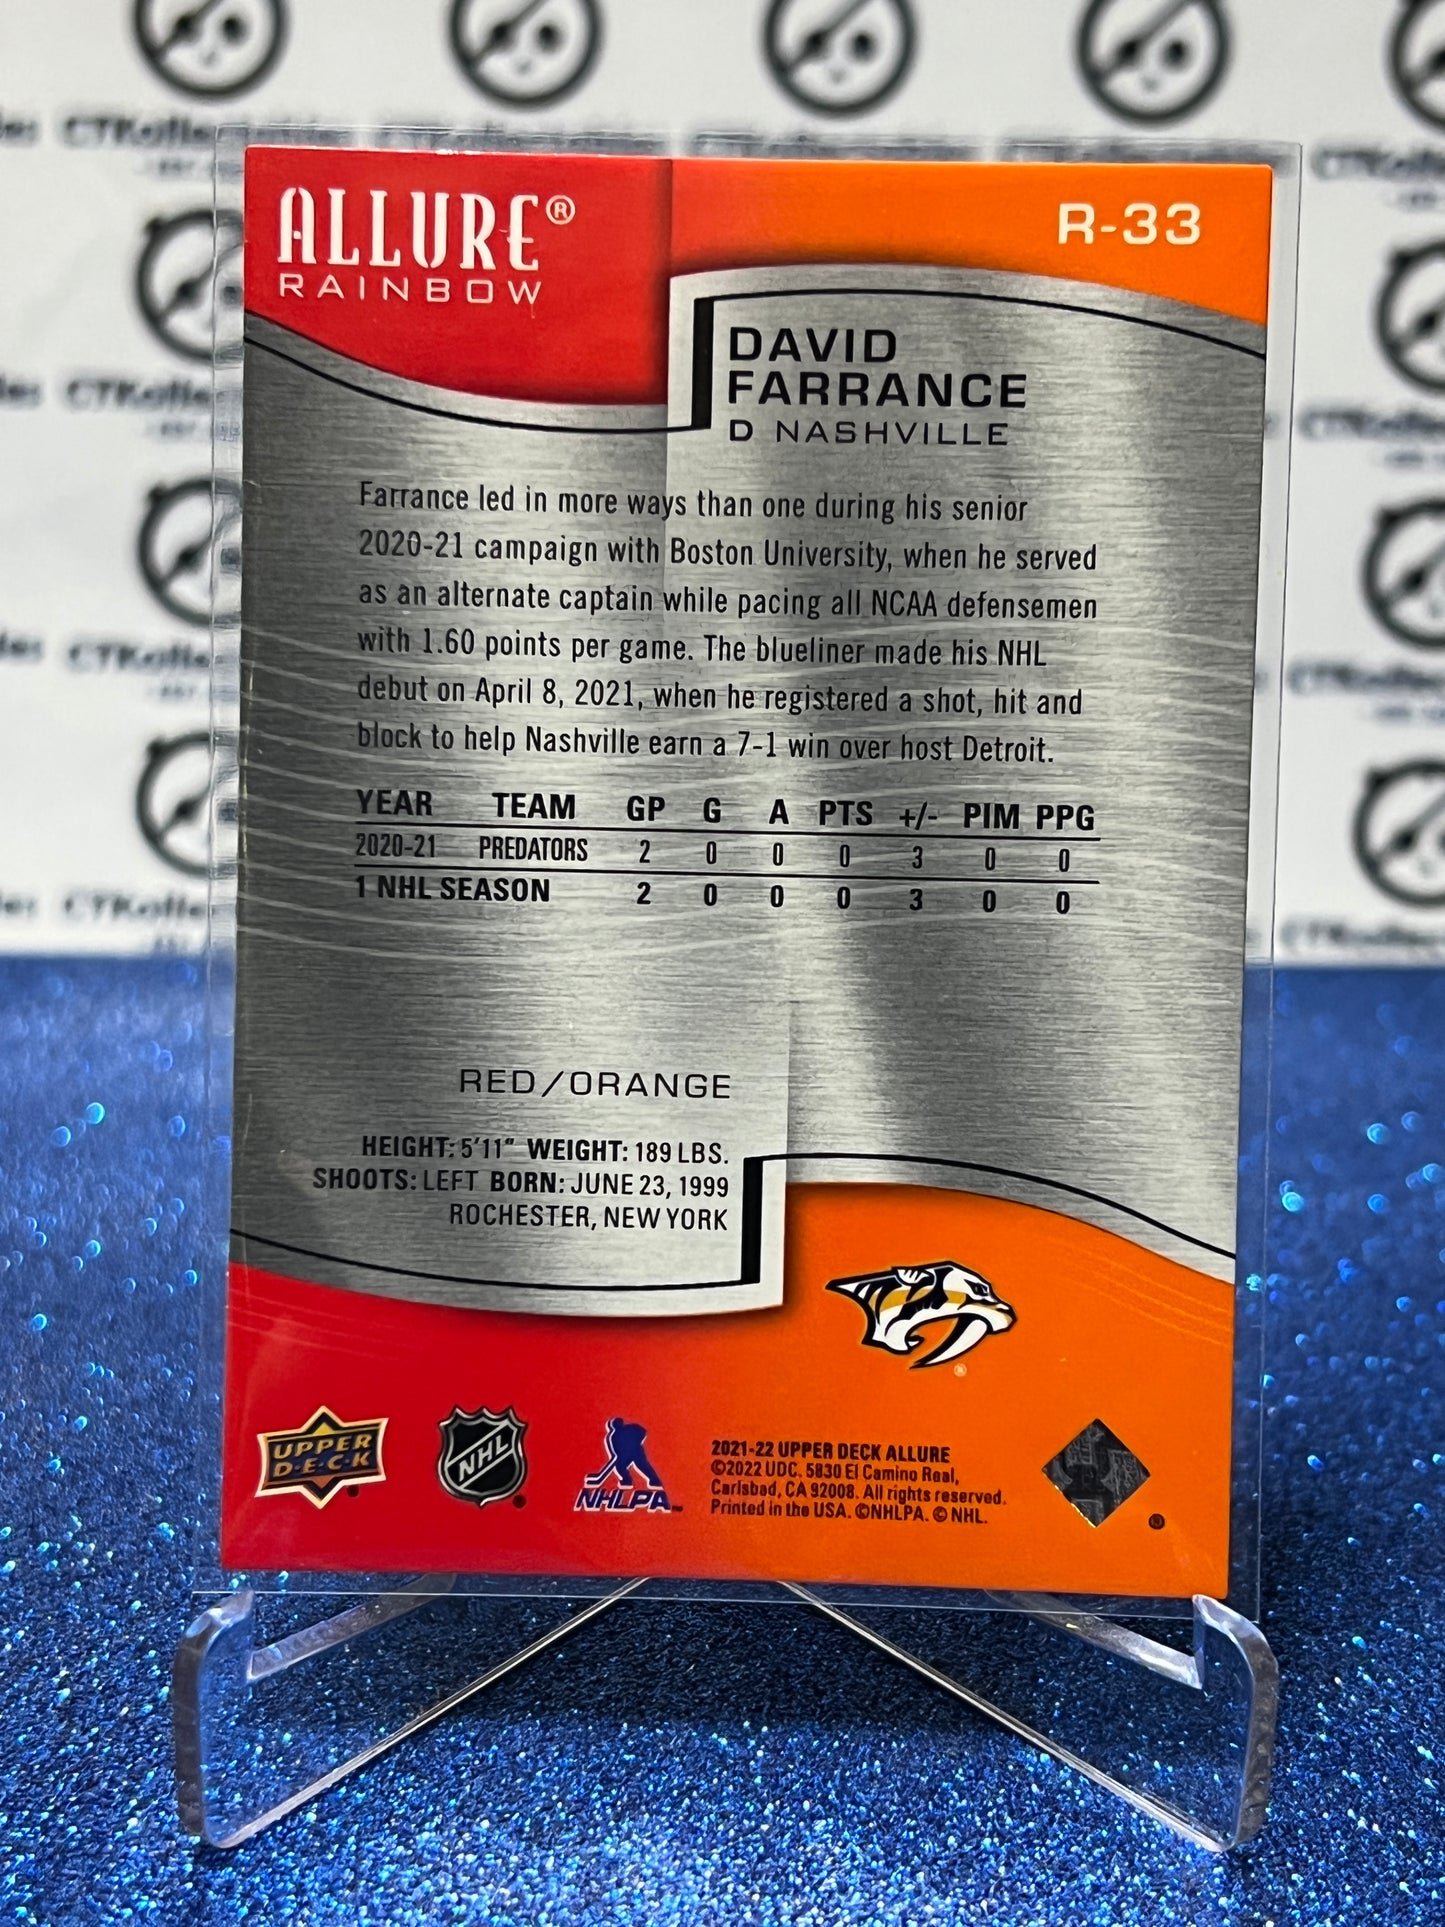 2021-22 UPPER DECK ALLURE DAVID FARRANCE # R-33 ROOKIE RED/ORANGE NASHVILLE PREDATORS NHL HOCKEY TRADING CARD